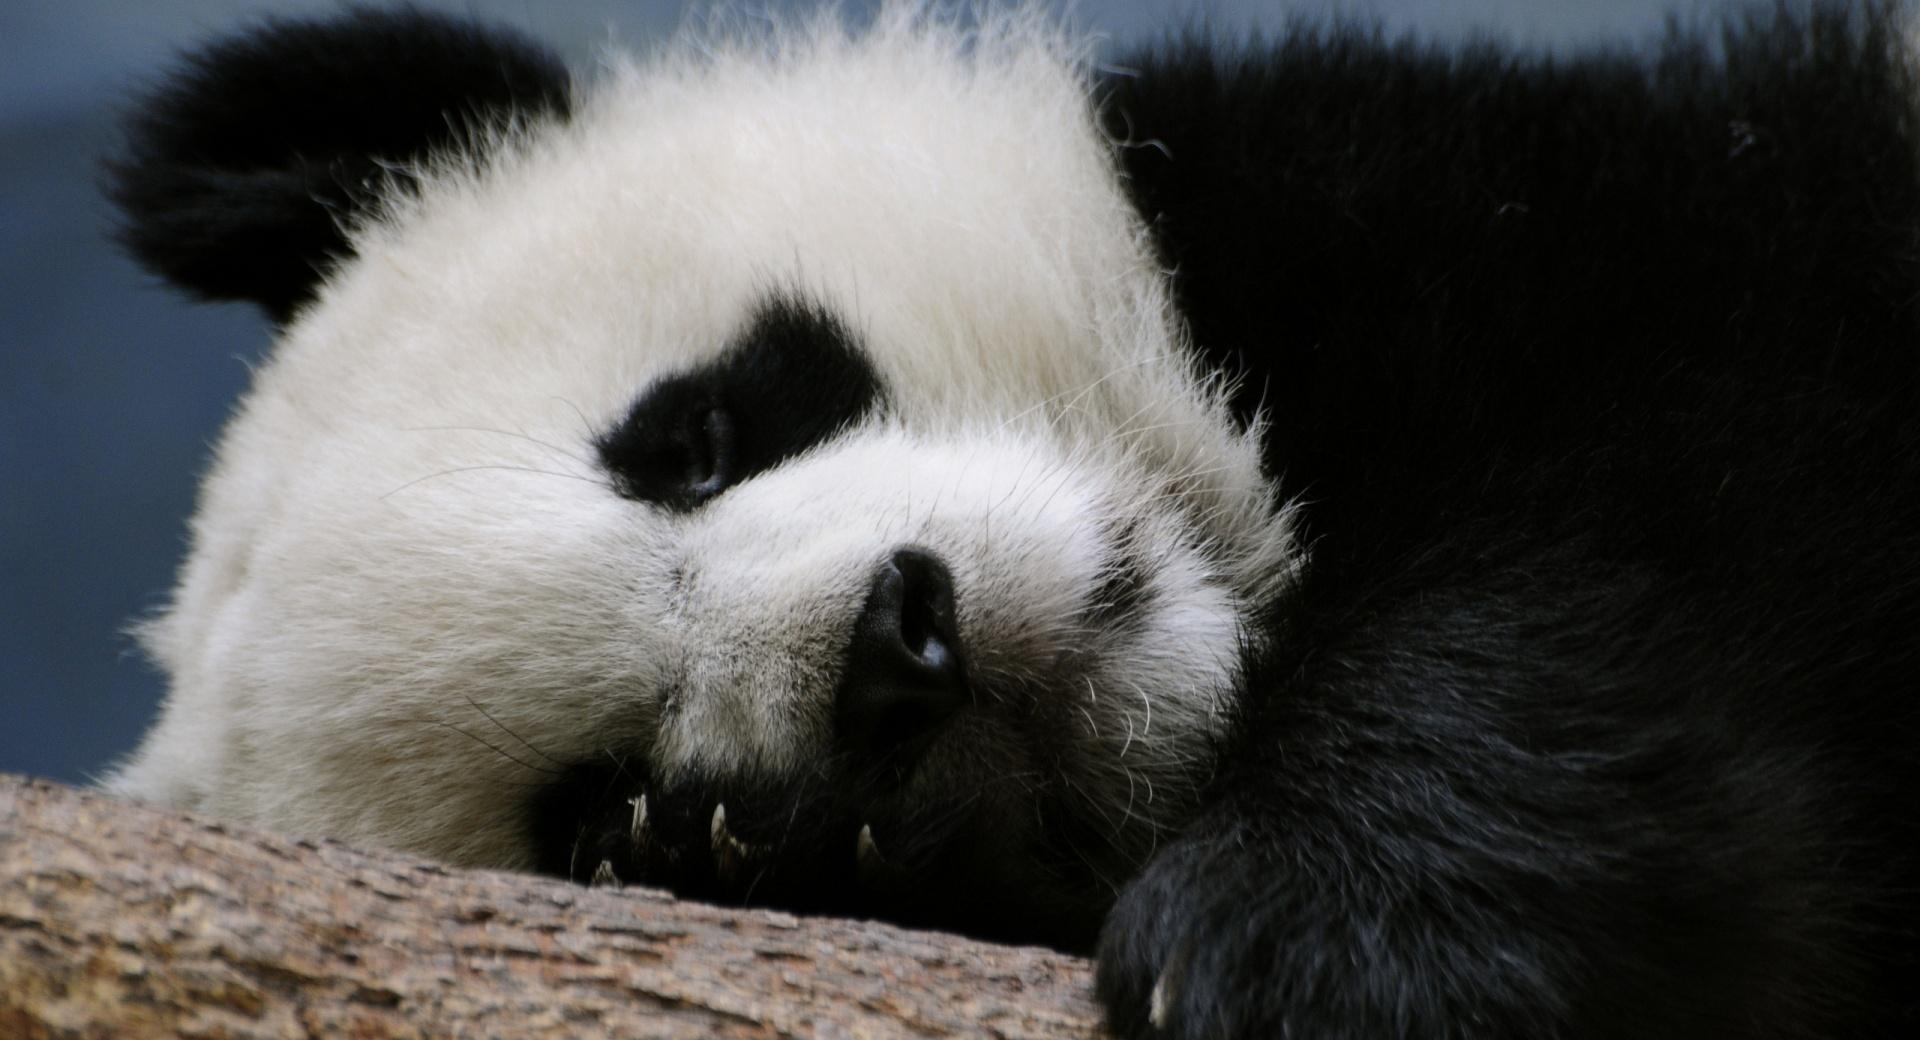 Sleeping Panda at 1600 x 1200 size wallpapers HD quality